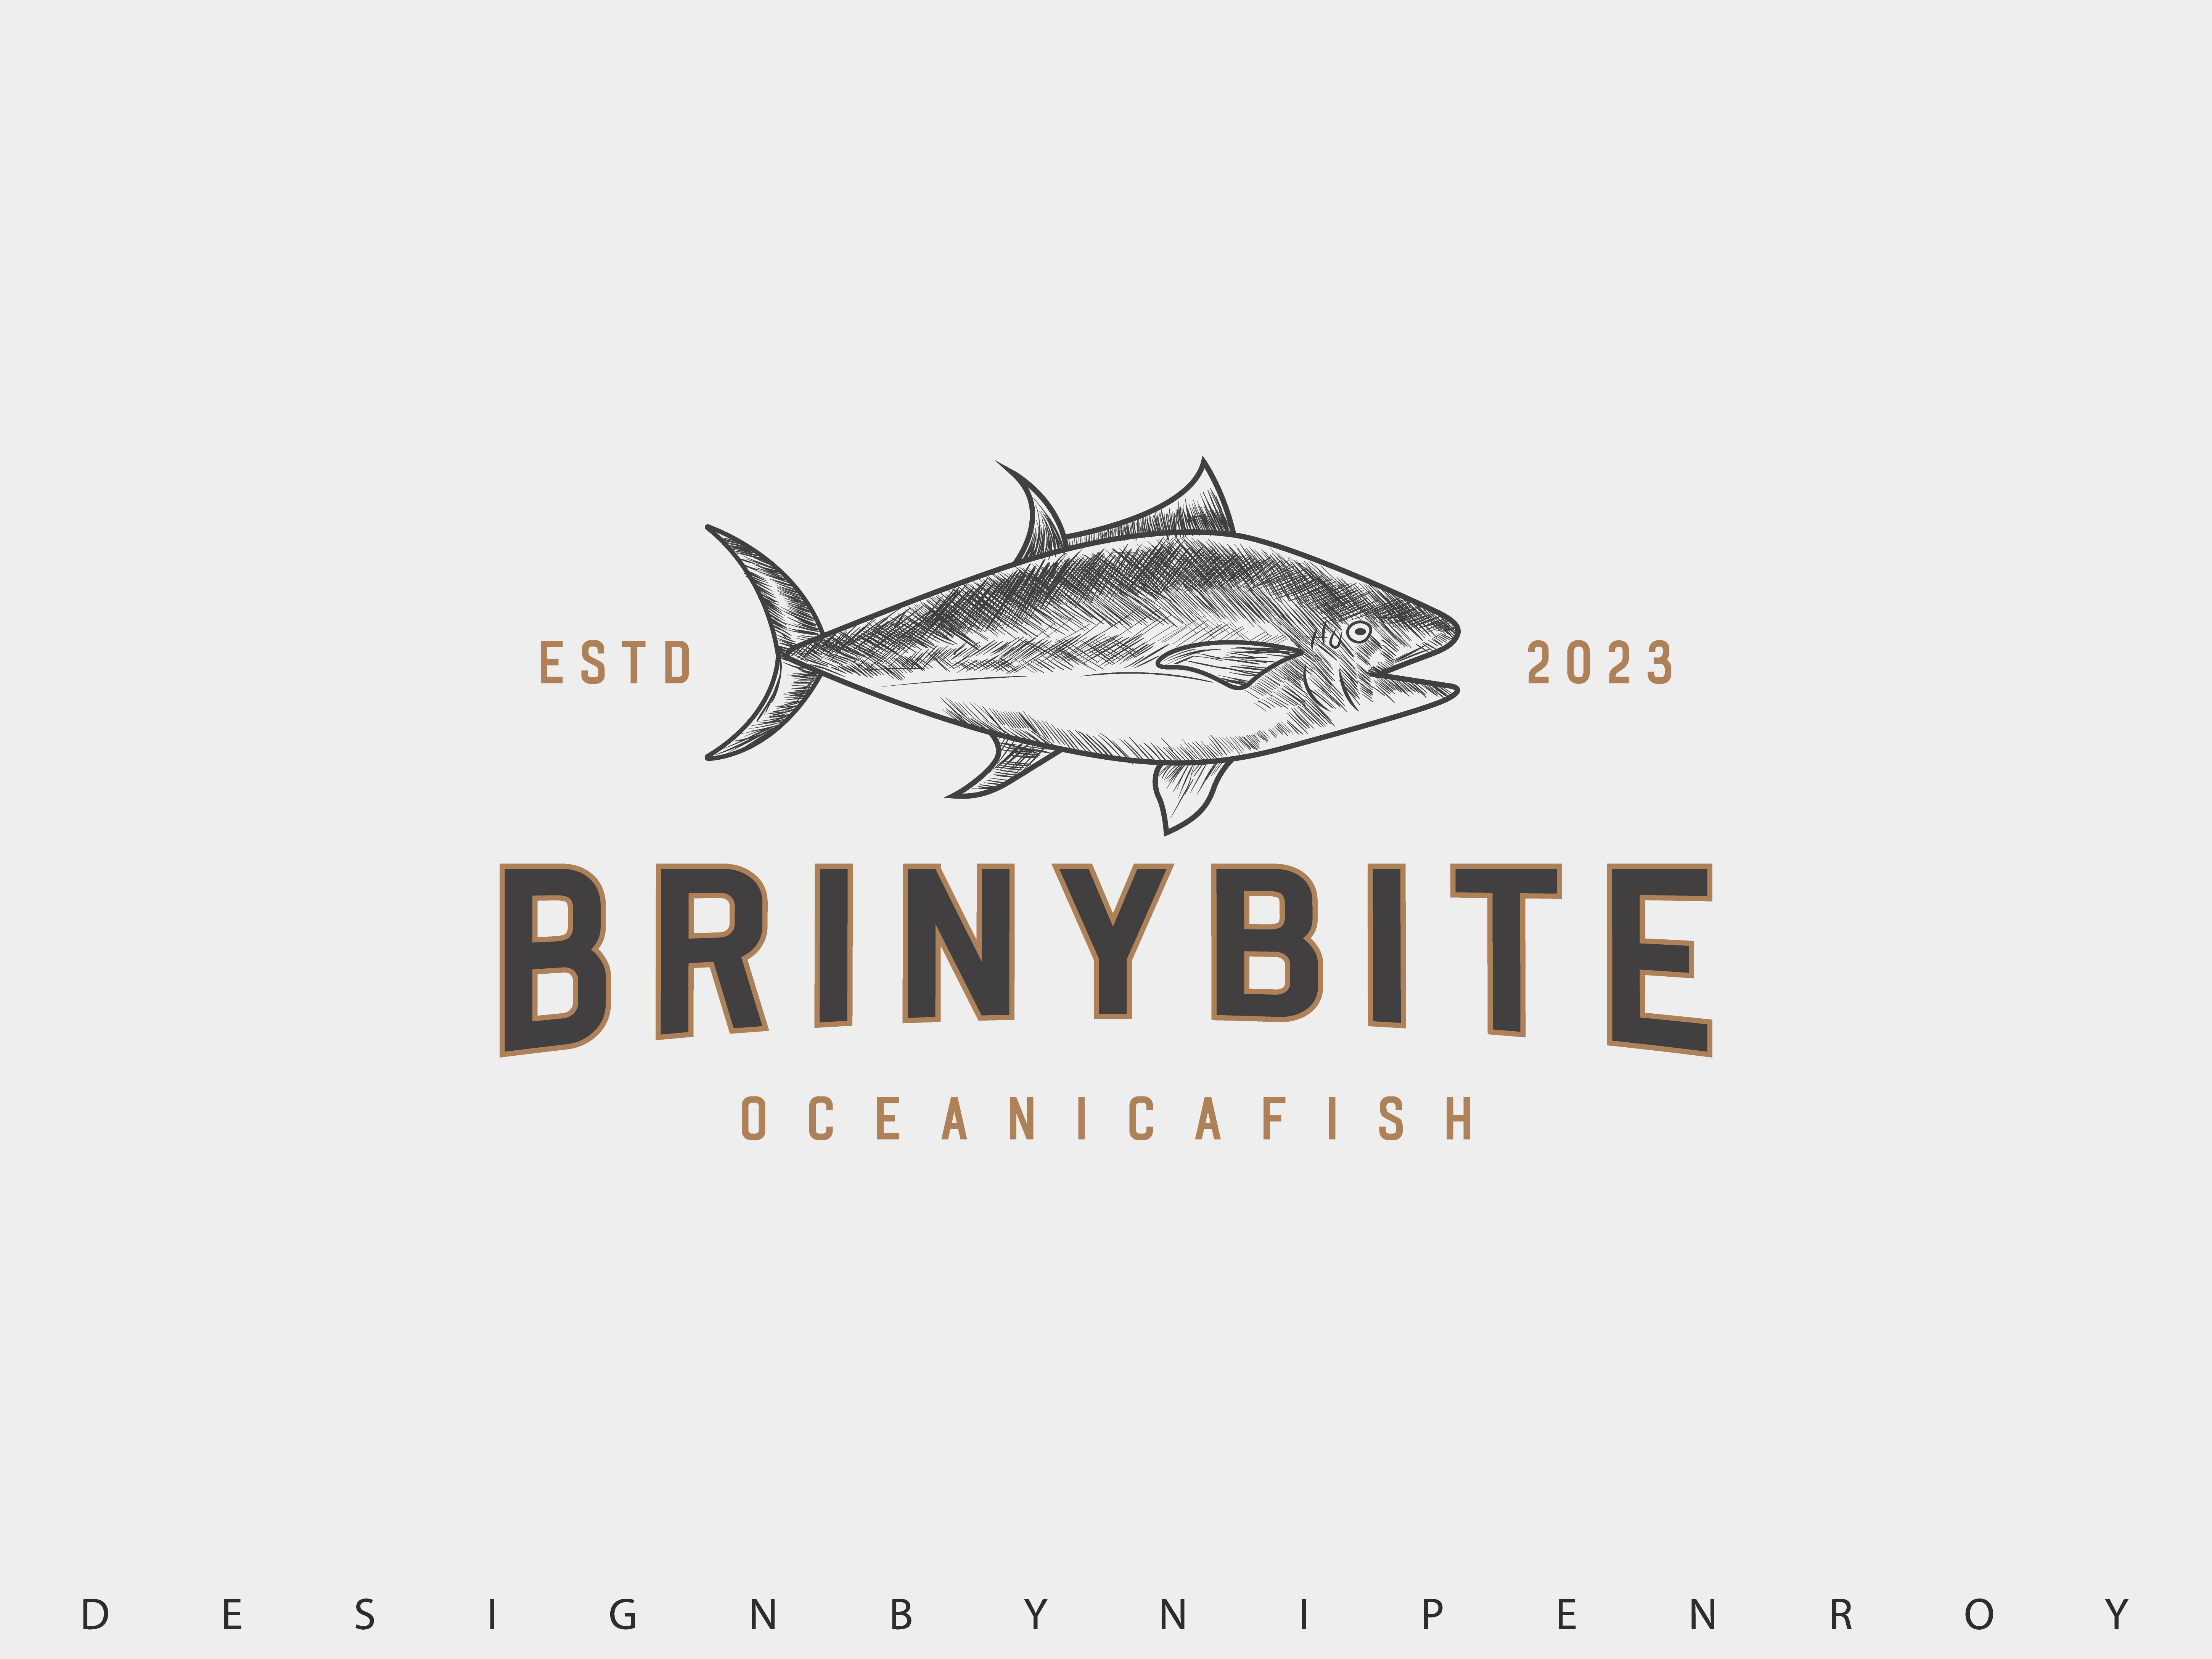 Brinybite ocean fish vintage logo by Nrepen Roy on Dribbble